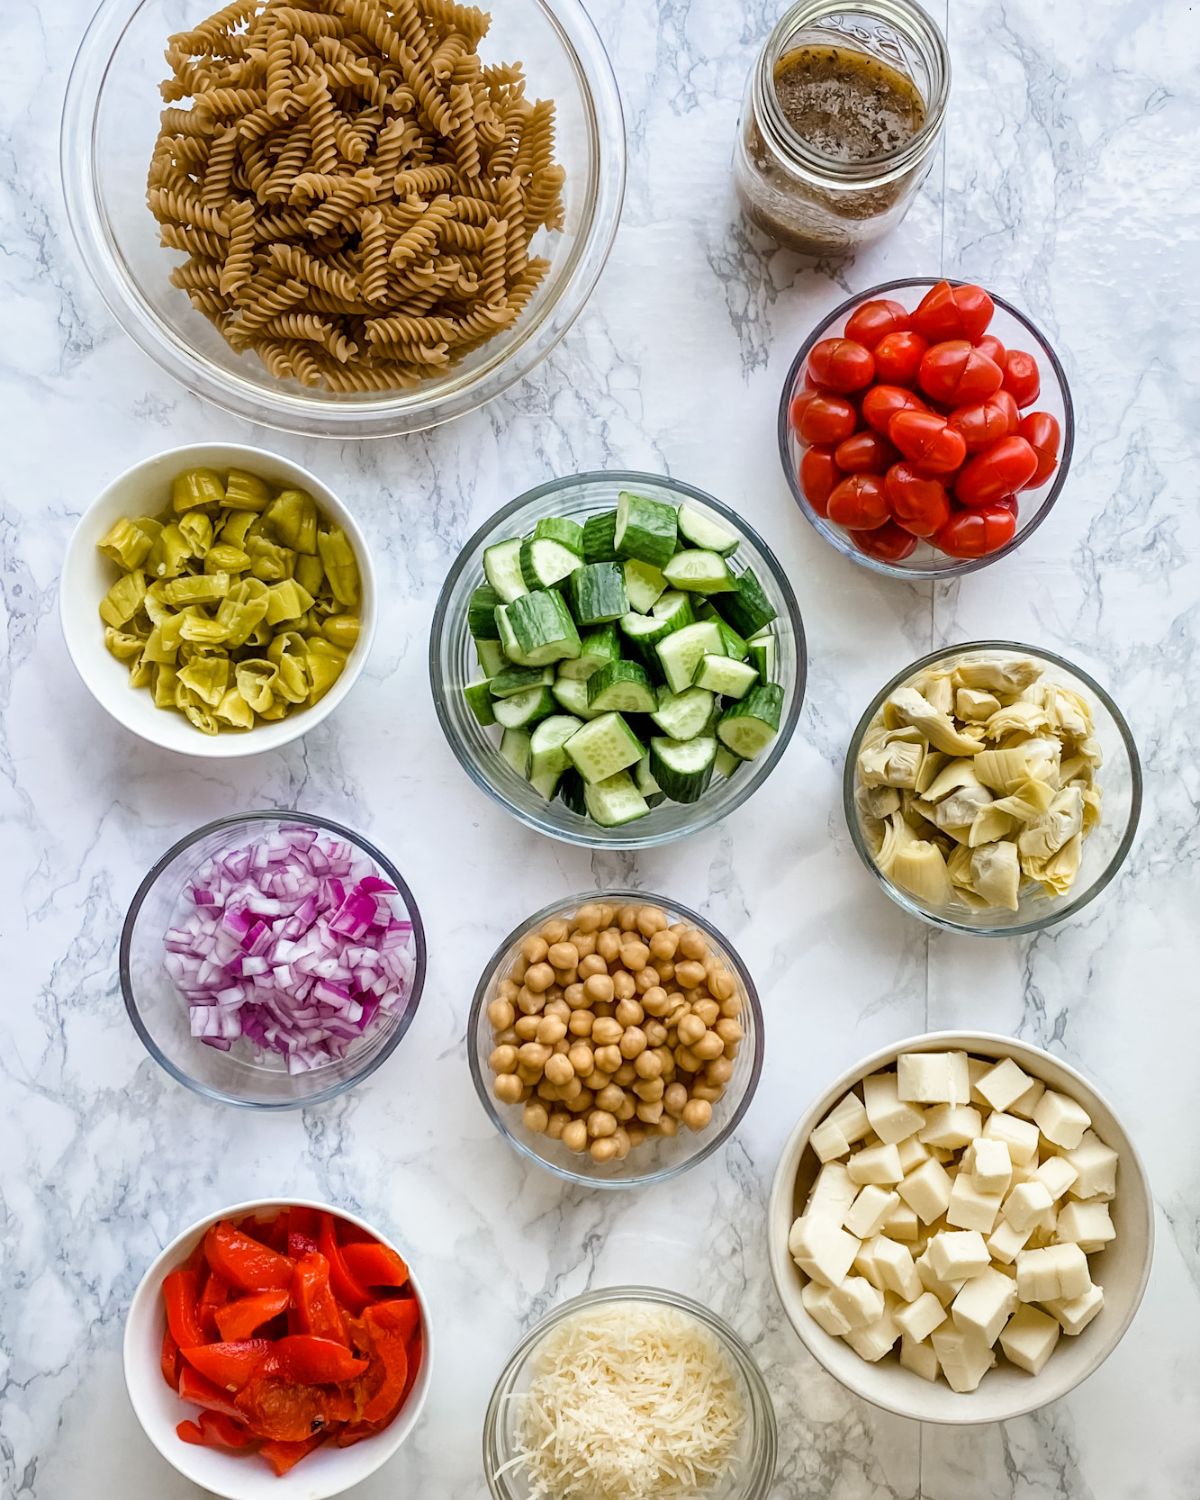 ingredients to make gluten free pasta salad.